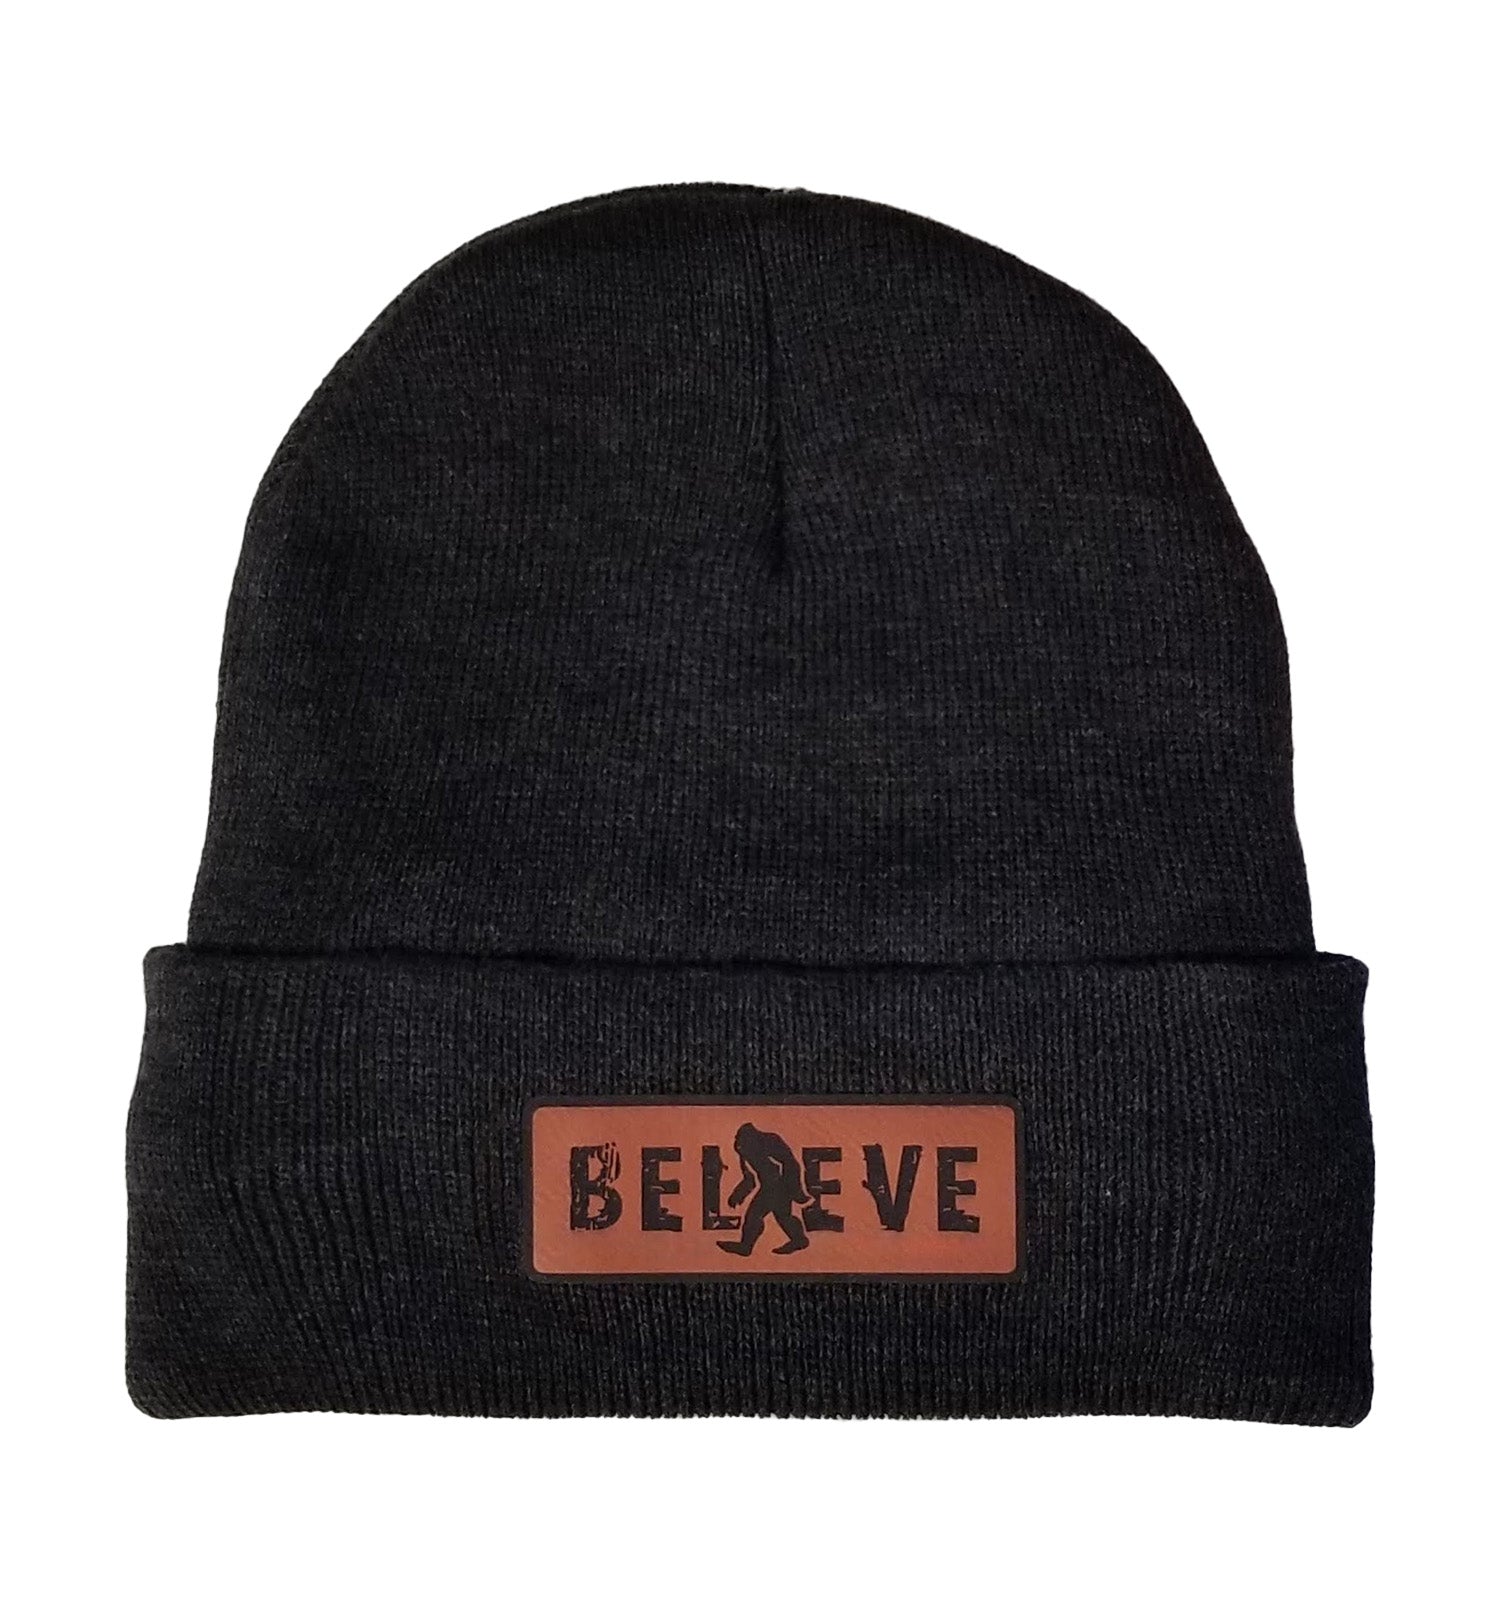 PNW Beanie - Bigfoot Believe - Cuff Sherpa Lined - Front - Black